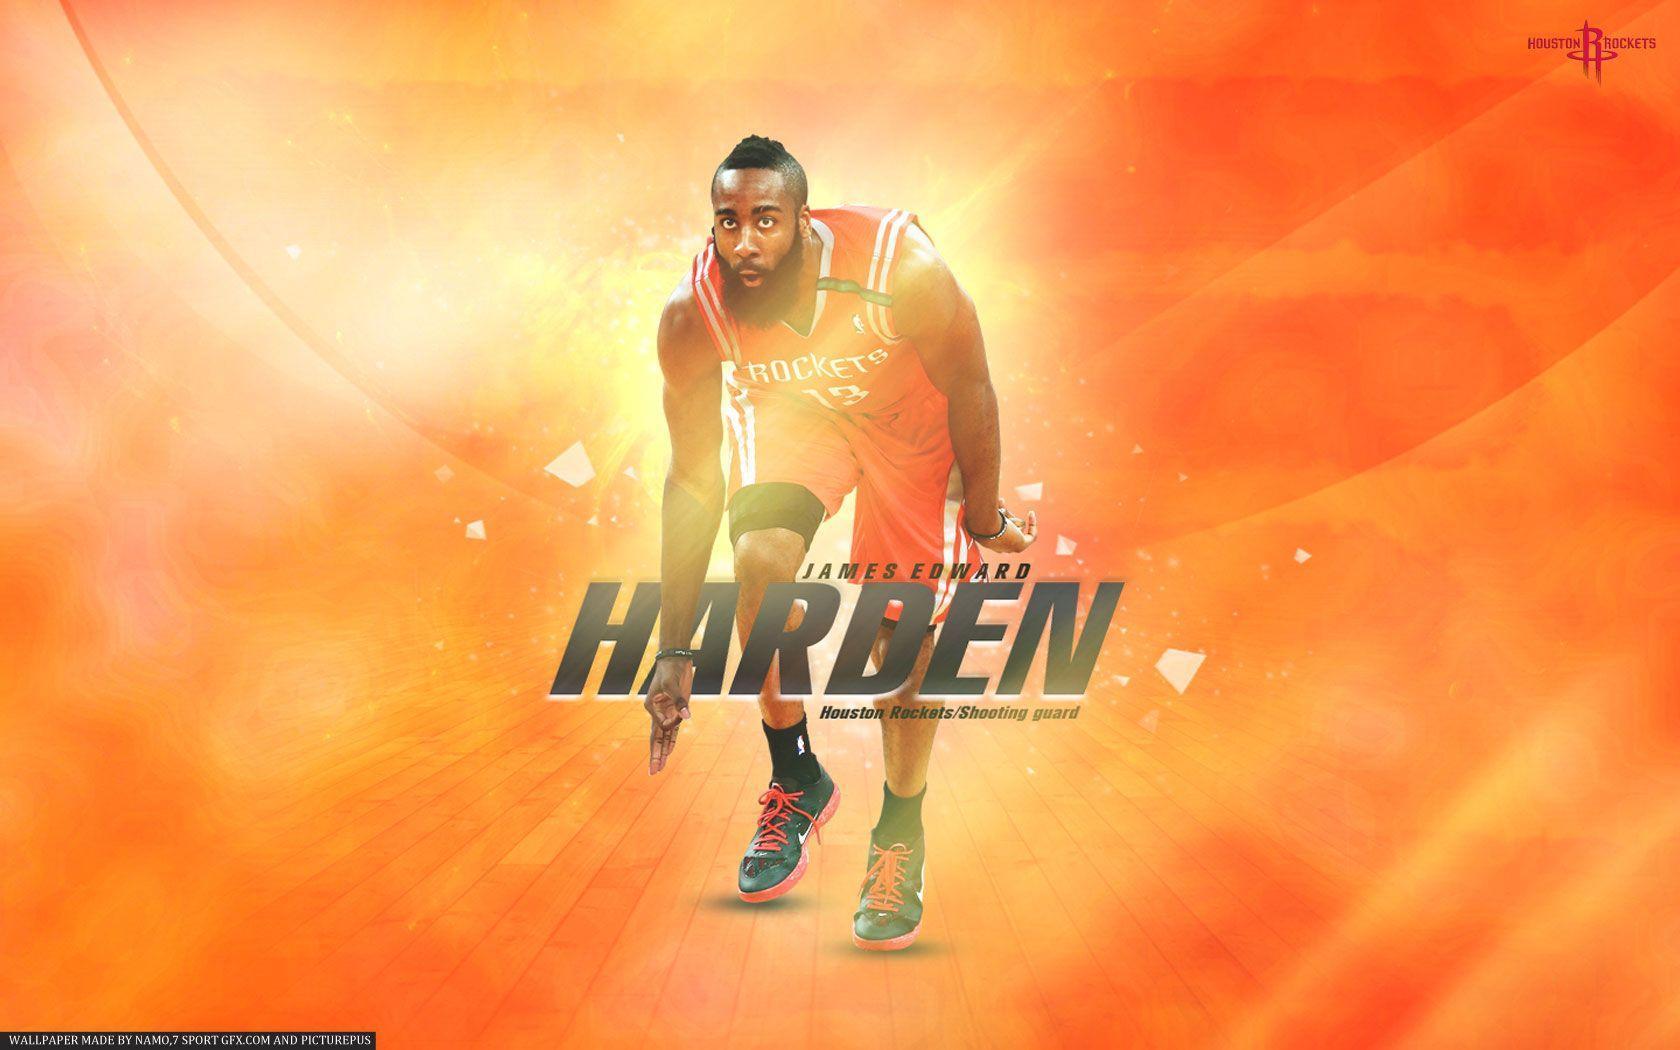 James Harden Wallpaper. Basketball Wallpaper at